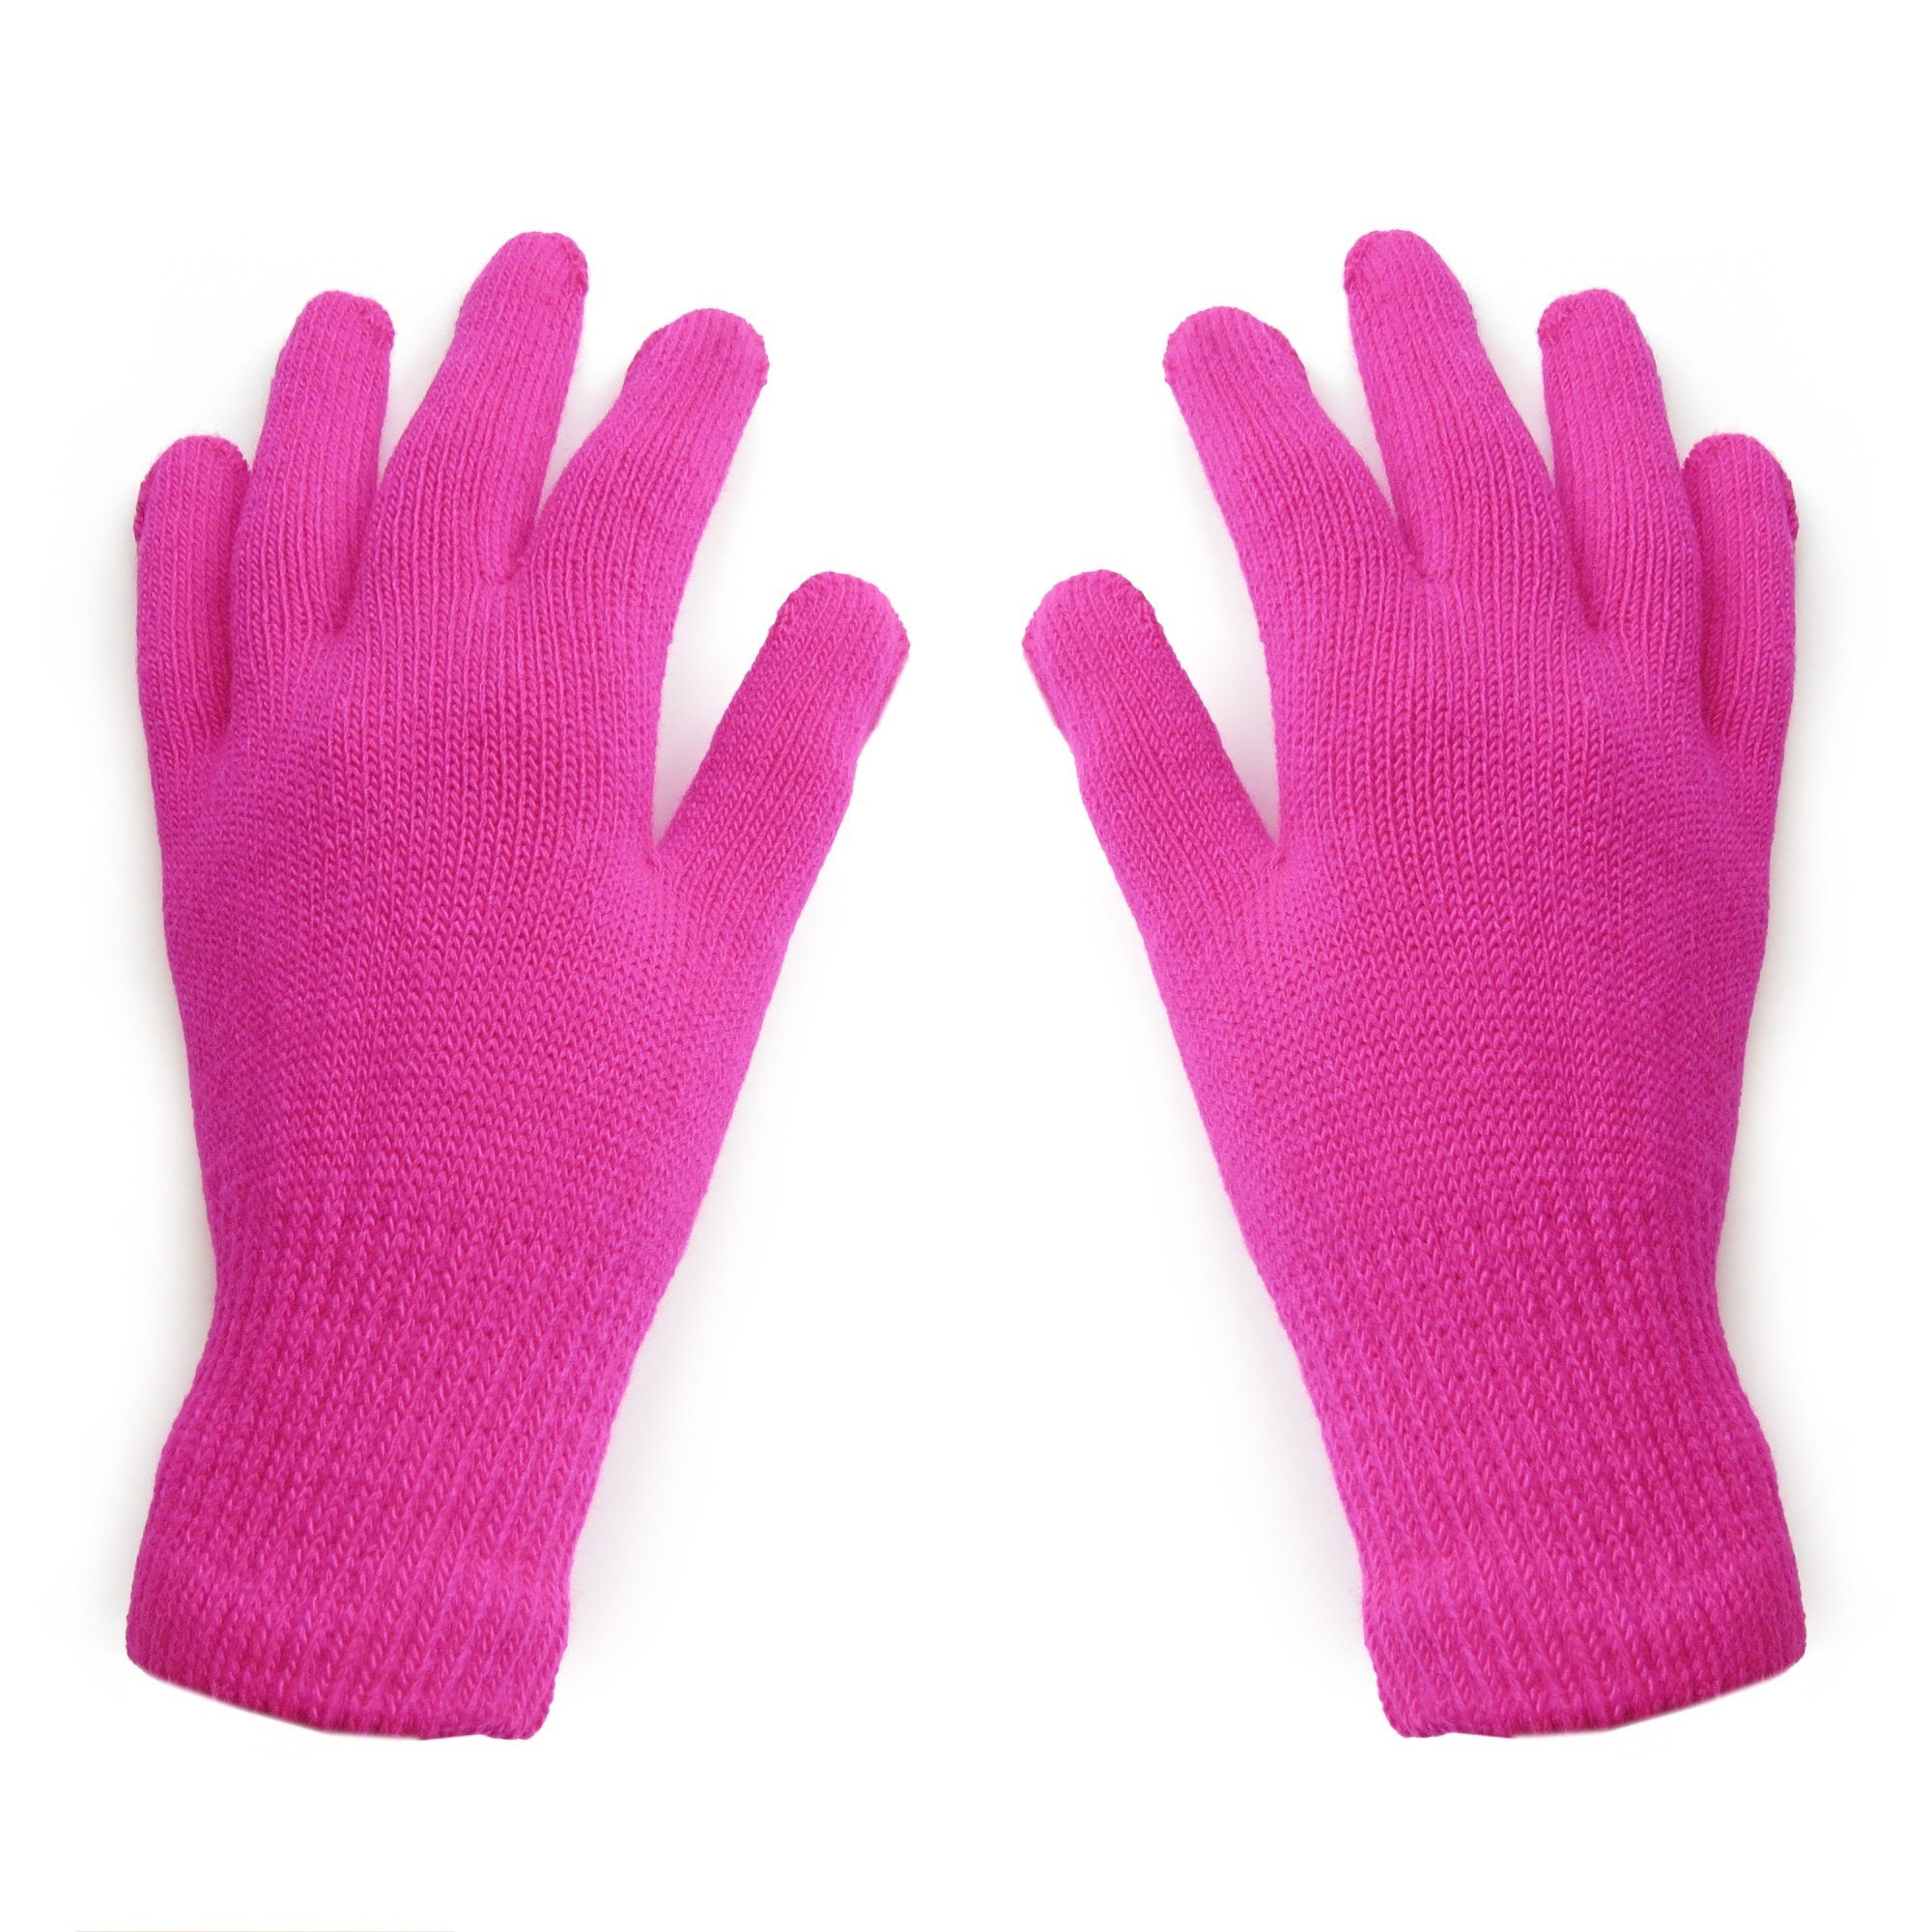 Sonia Originelli Strickhandschuhe Strickhandschuhe Neon bunt knallig ungefüttert dehnbar unisex Ungefüttert, Onesize pink